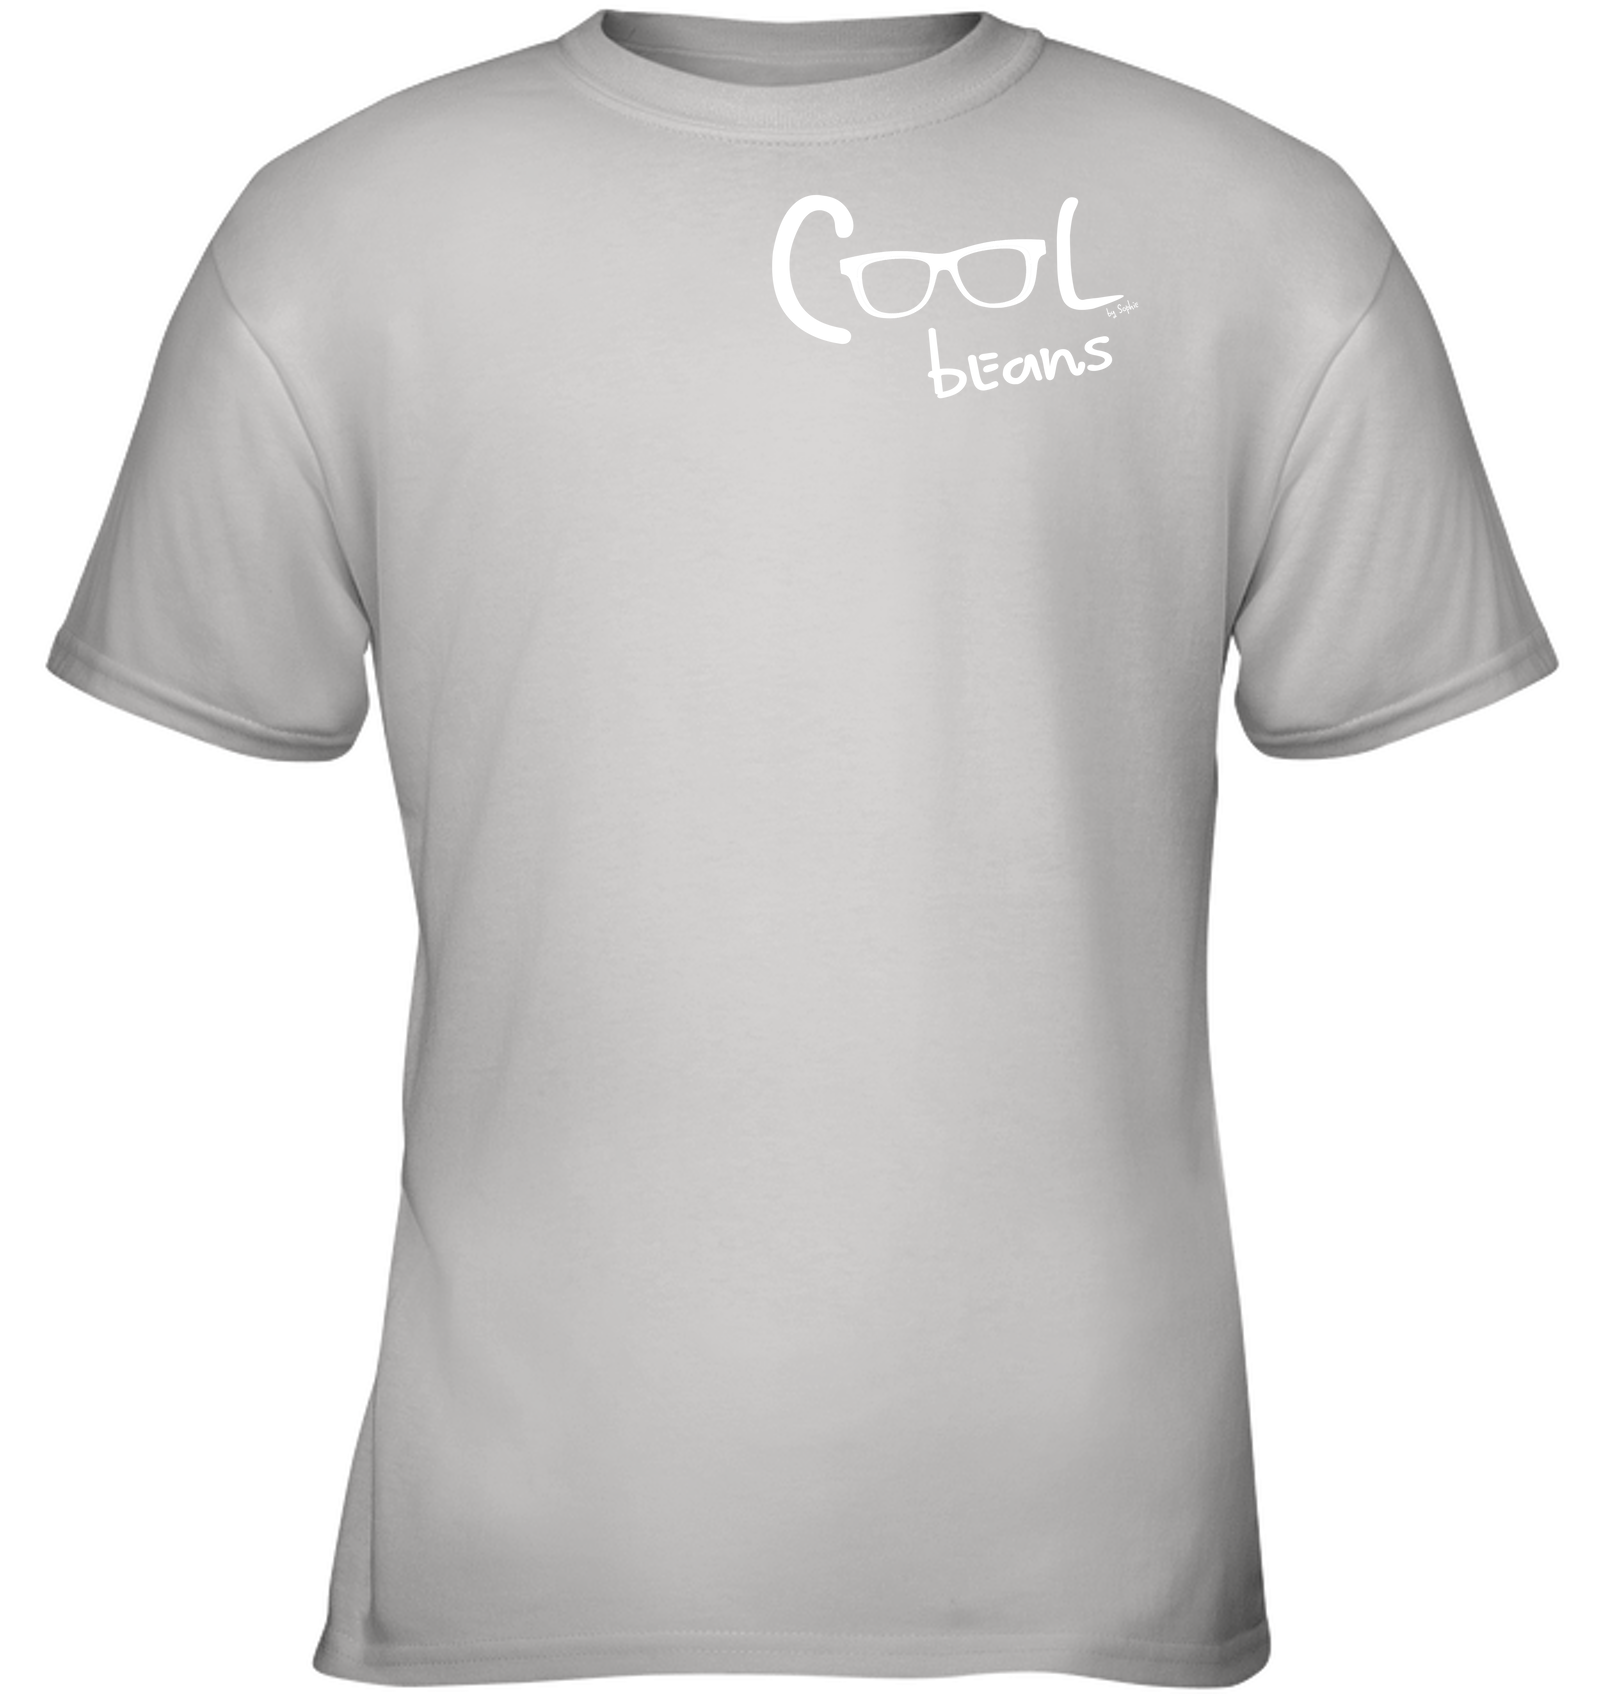 Cool Beans - White (Pocket Size) - Gildan Youth Short Sleeve T-Shirt